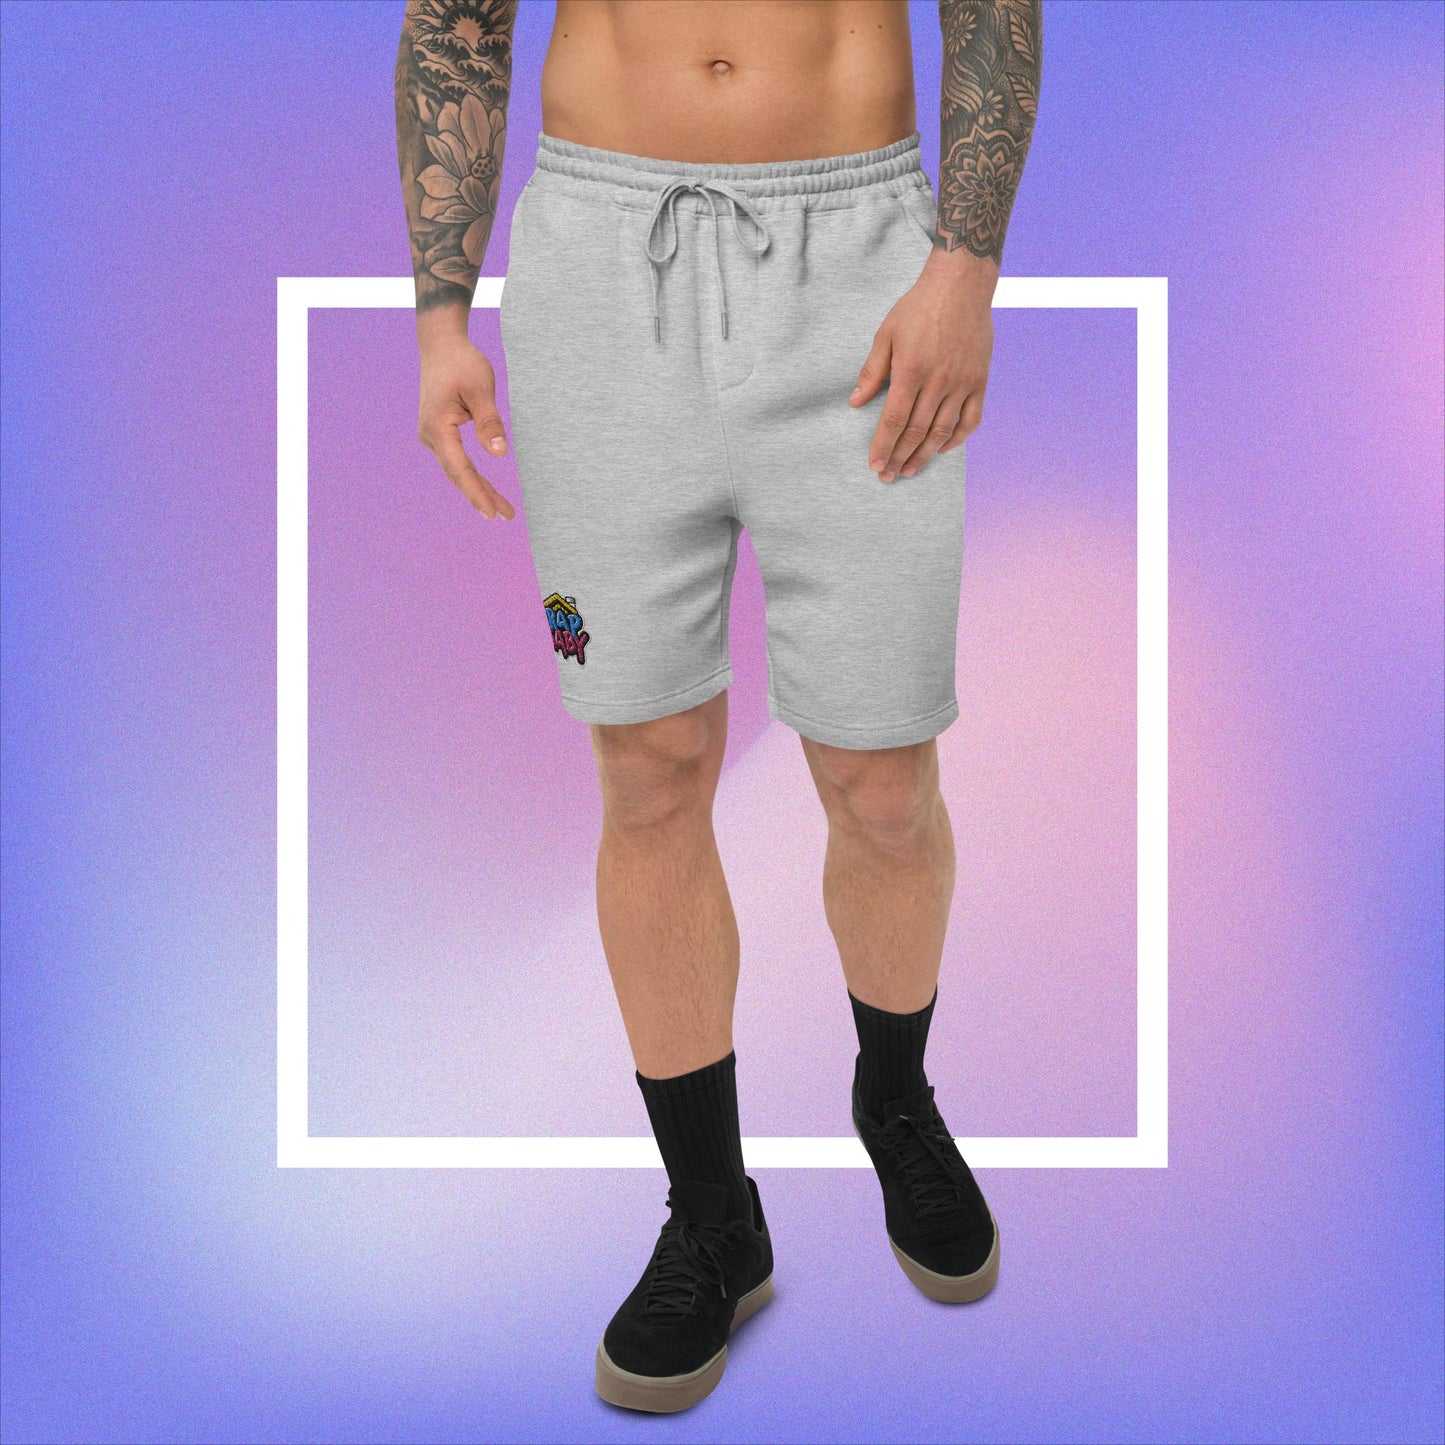 Trap Baby Men's shorts